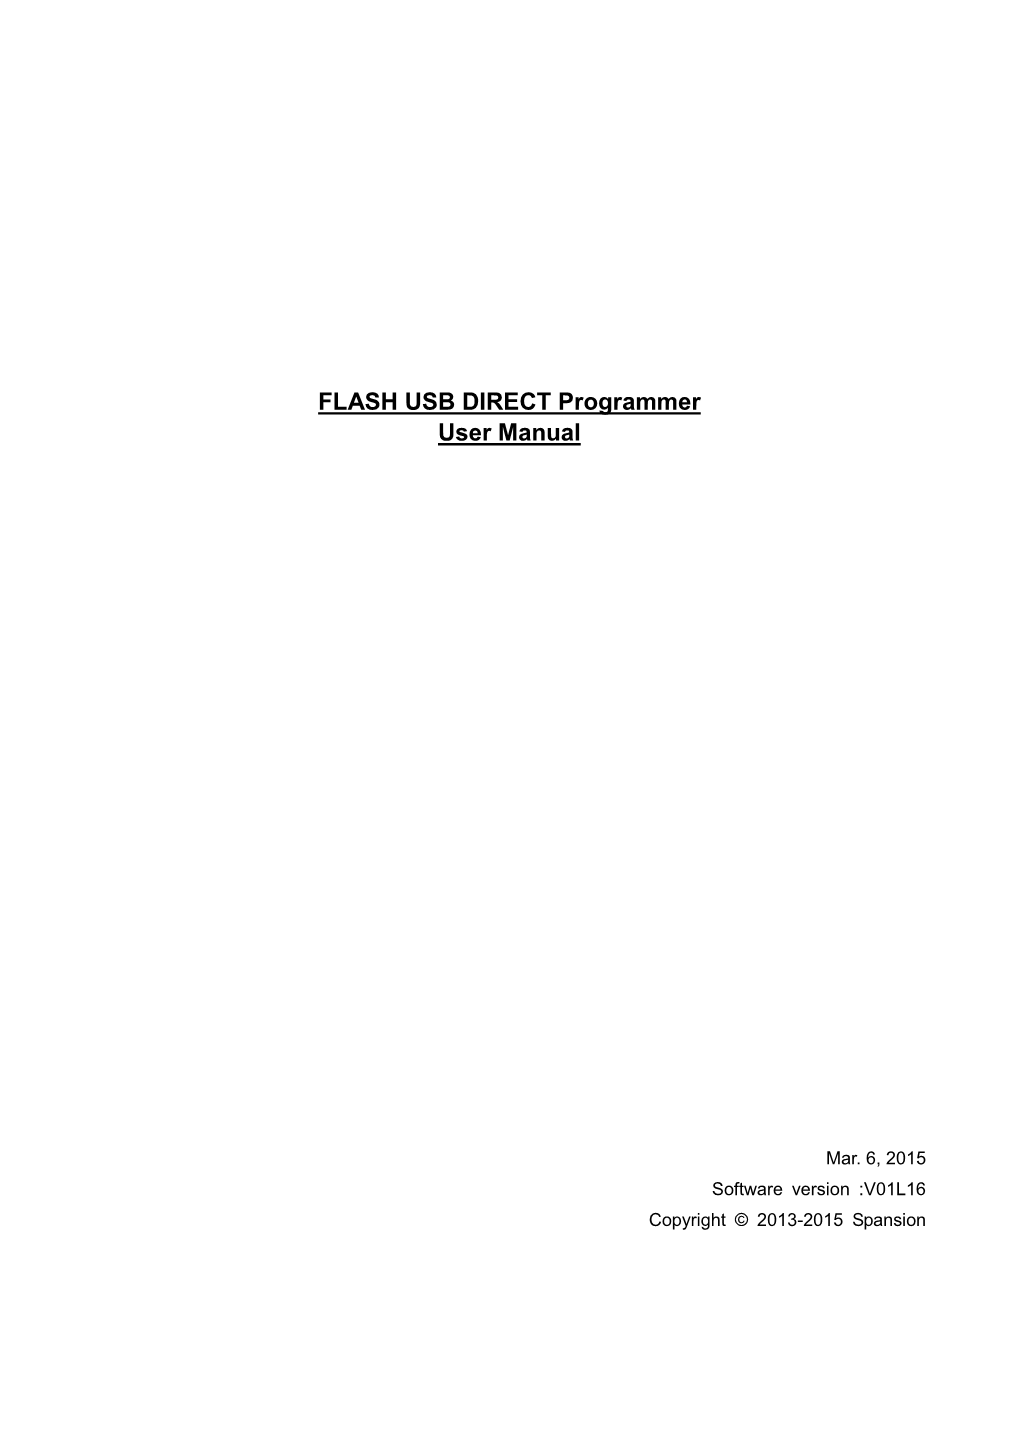 FLASH USB DIRECT Programmer User Manual